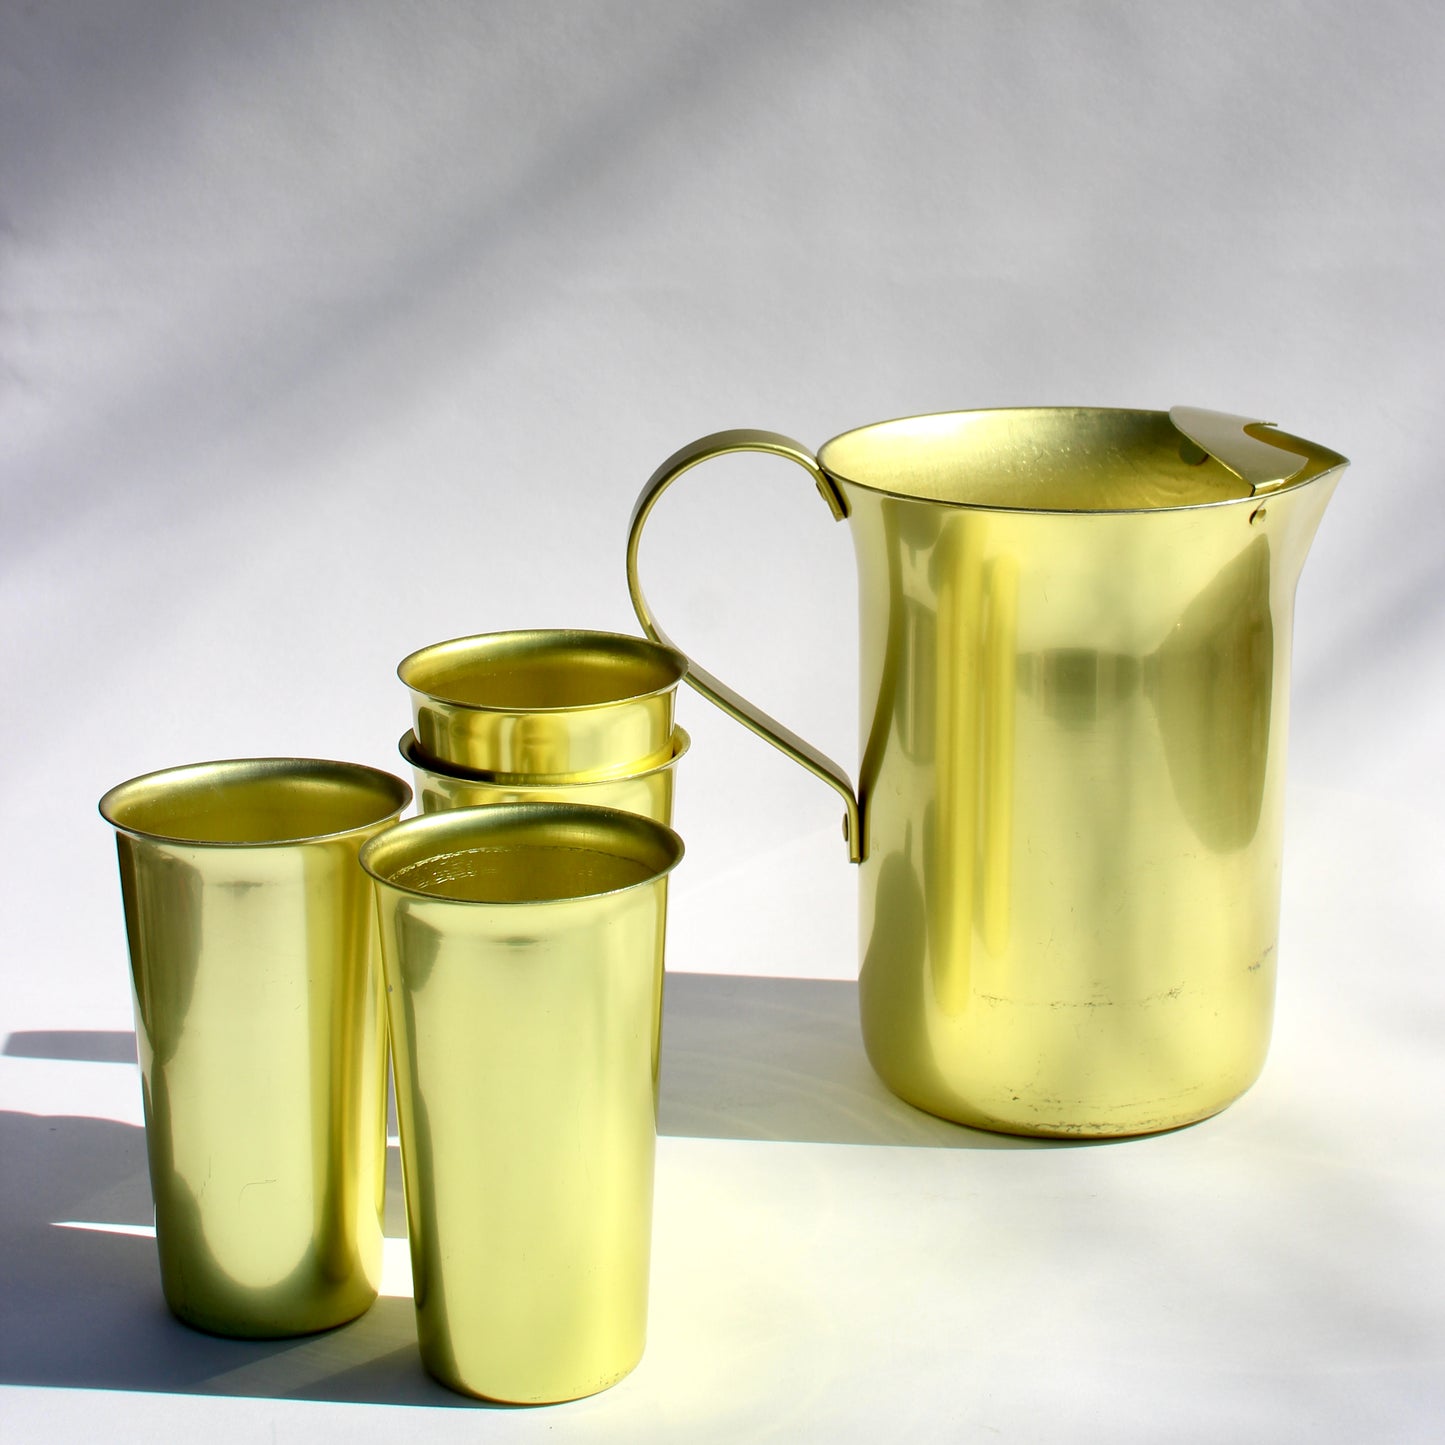 golden aluminum pitcher set